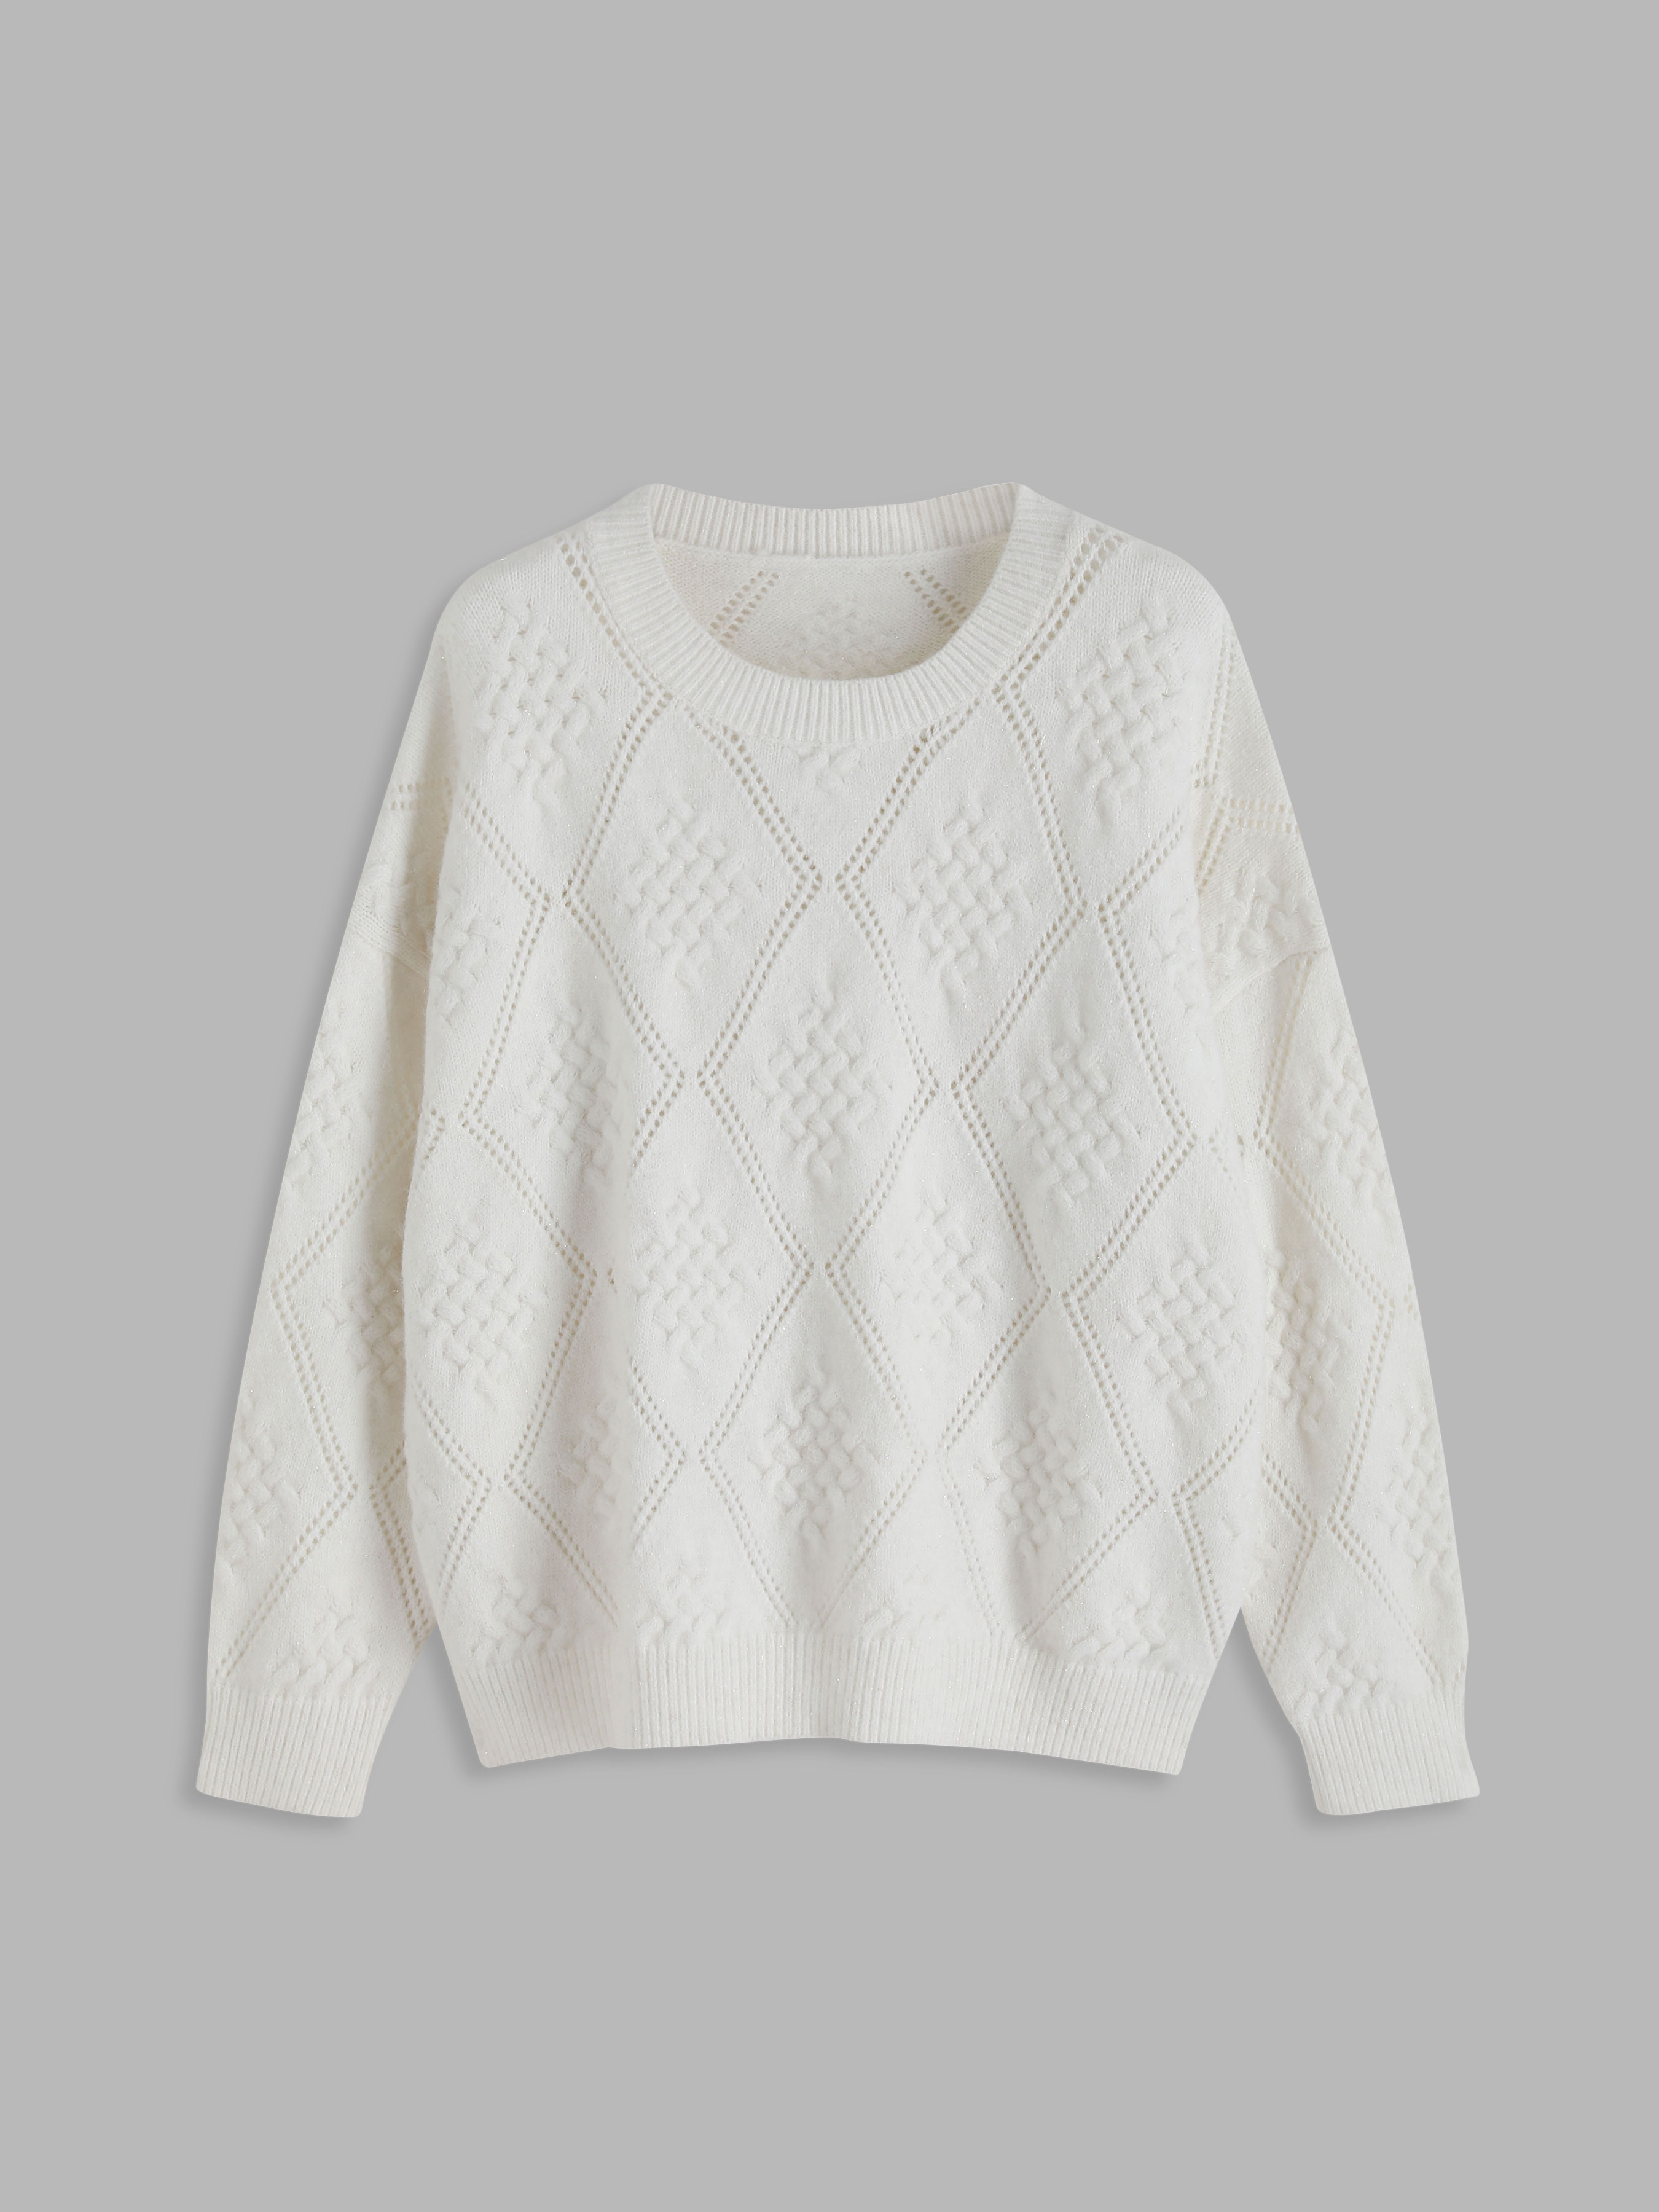 White Argyle Print Sweater - Cider